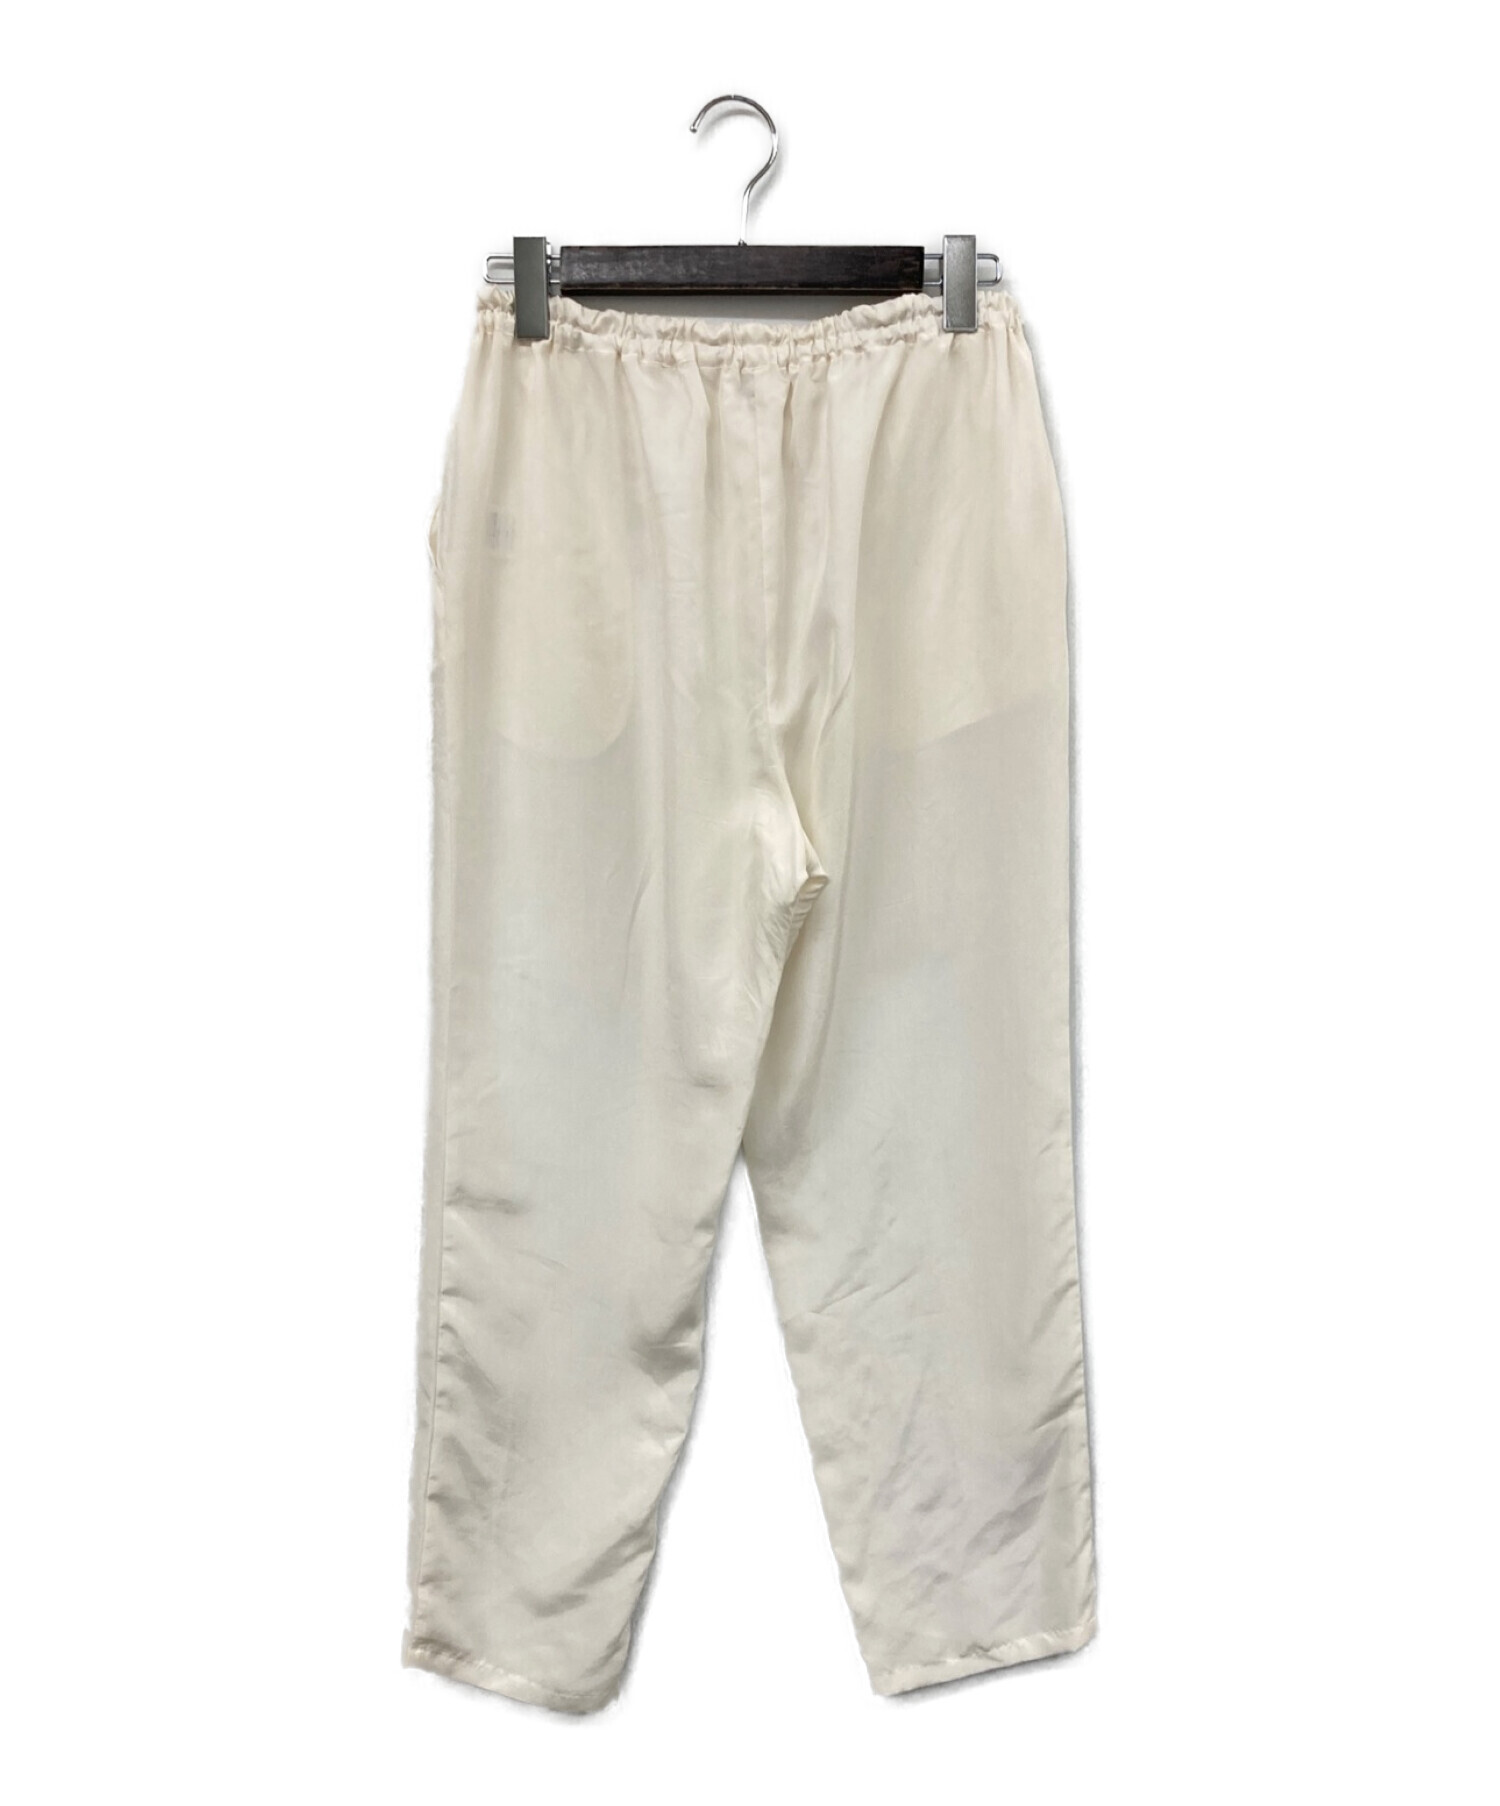 yoli silk pants シルクパンツ サイズ1 - パンツ定価36300円